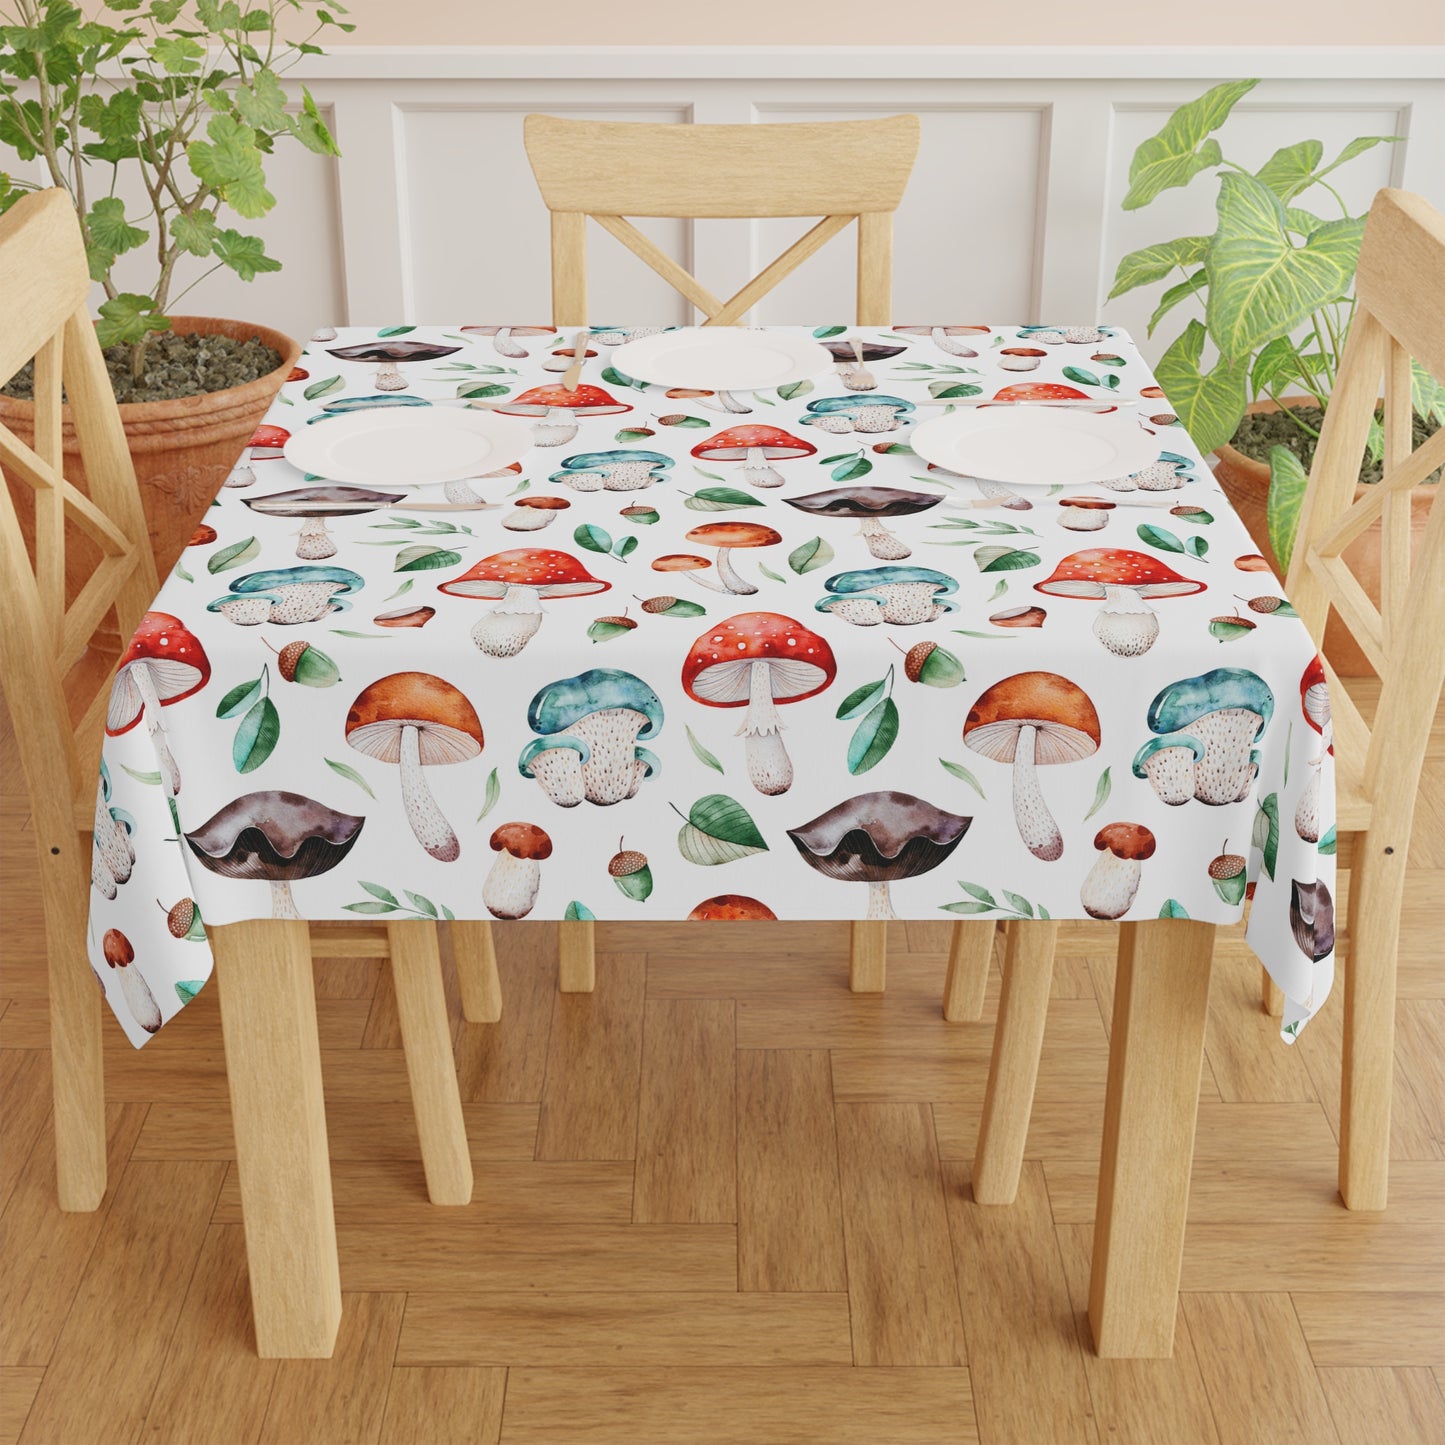 Acorns and Mushrooms Tablecloth